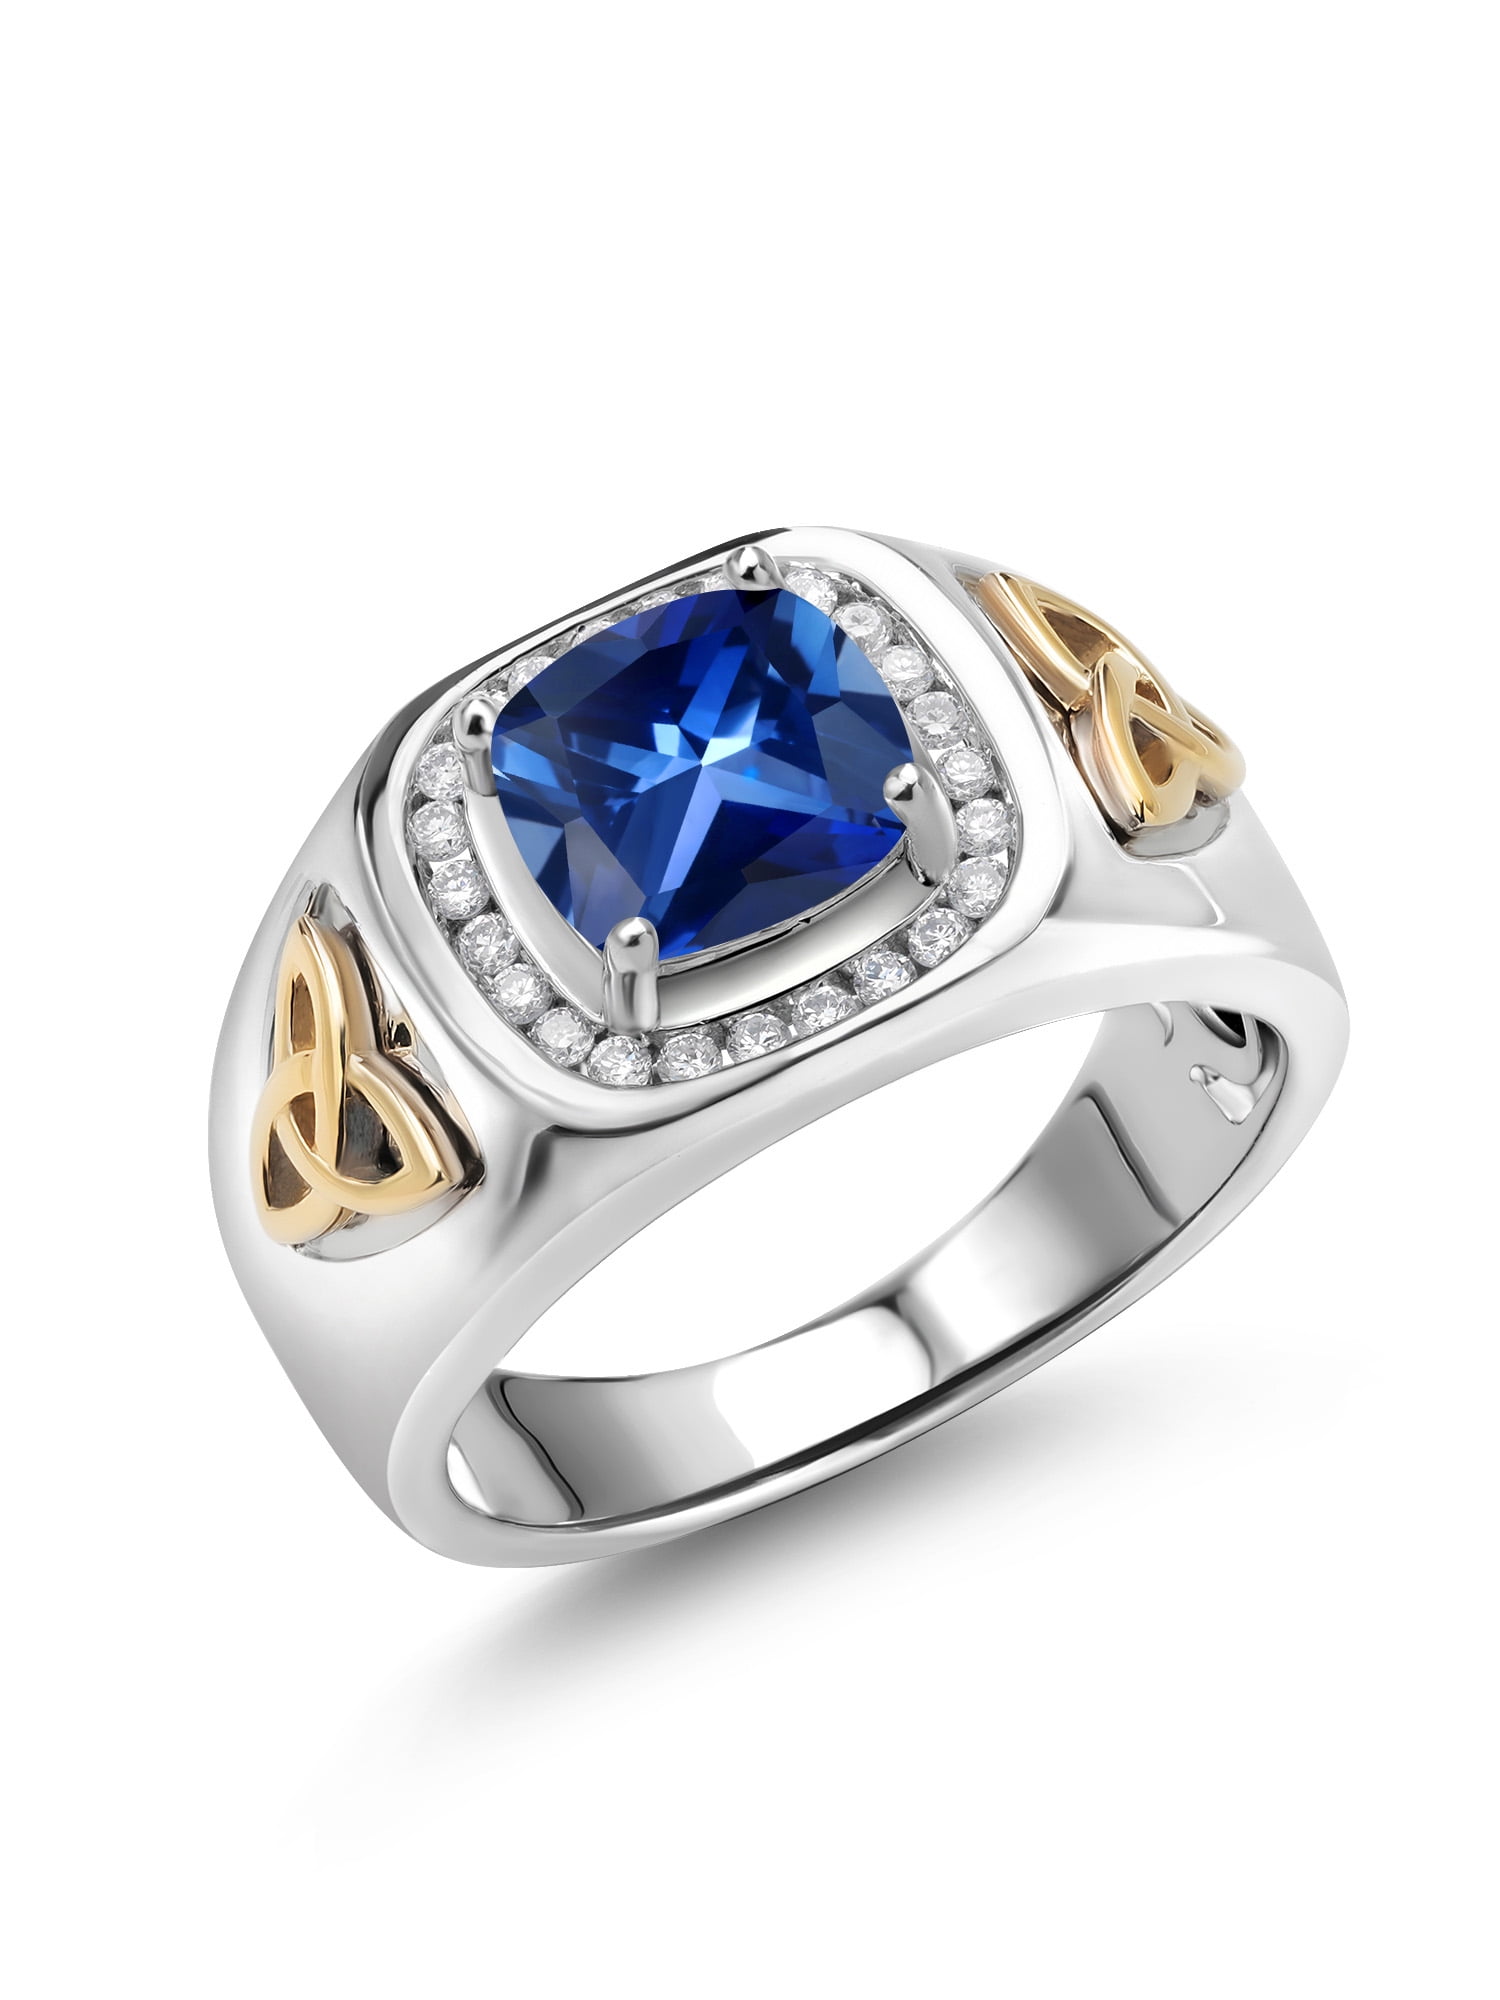 Buy Princess Blue Sapphire Diamond Flat Top Statement Ring 14k White Gold,  5.61 Gram | Jasper52 In Ny